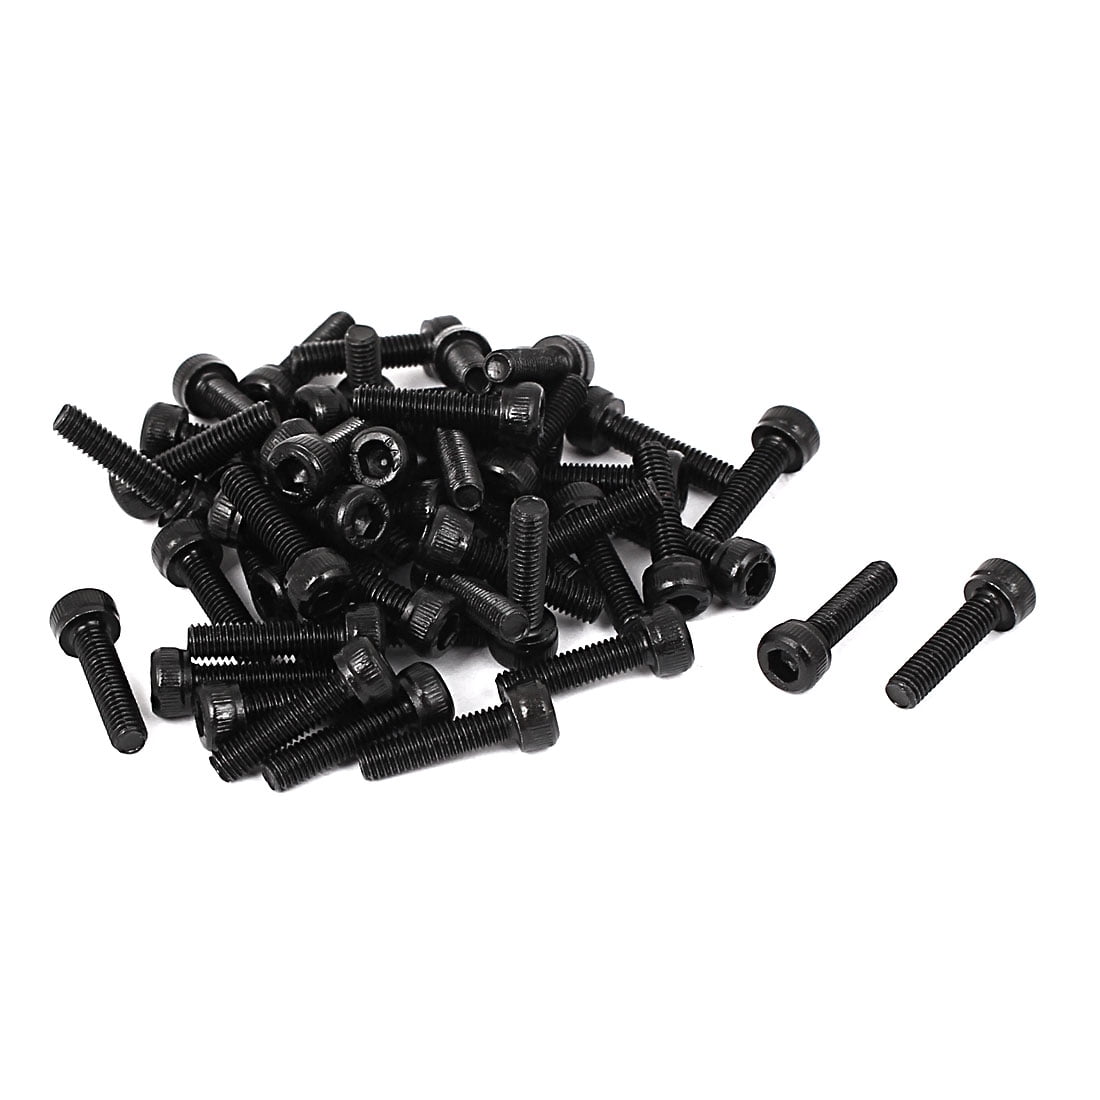 C: Countersunk Head Hexagon Socket Pack of 300 Pcs M3 Black Color Alloy Steel Hex Socket Screws Bolt with Hex Nuts,100 pcs Washers Machine Fastener Assortment Kit